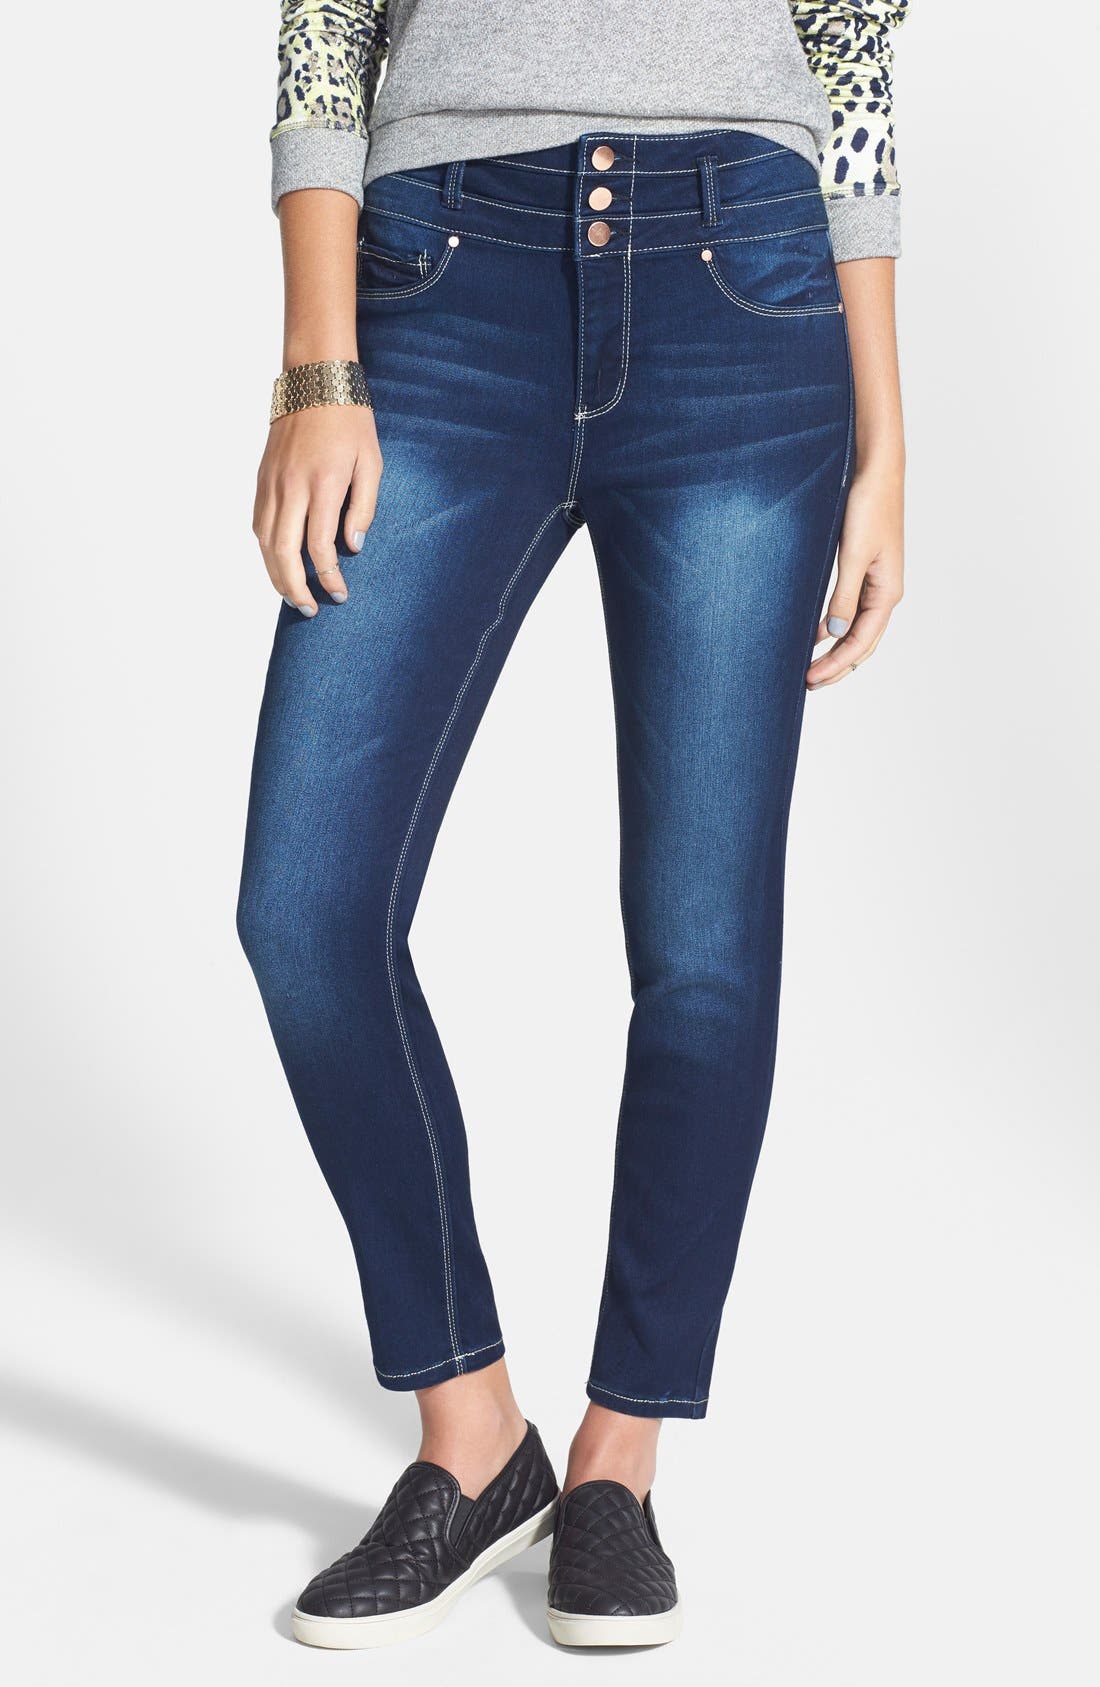 levis summer jeans